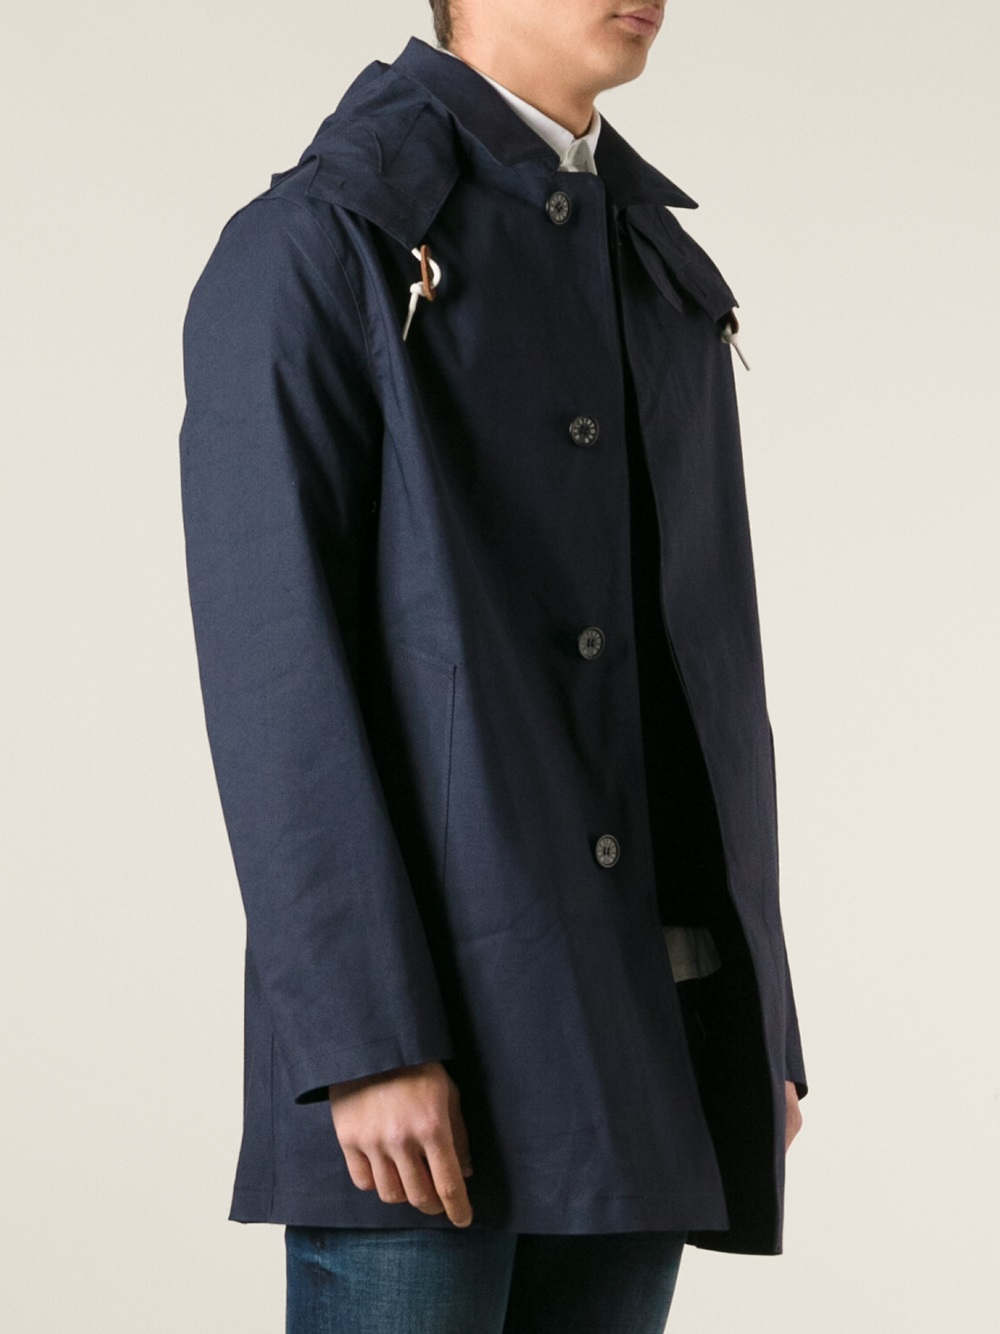 Lyst - Mackintosh Dunoon Coat in Blue for Men